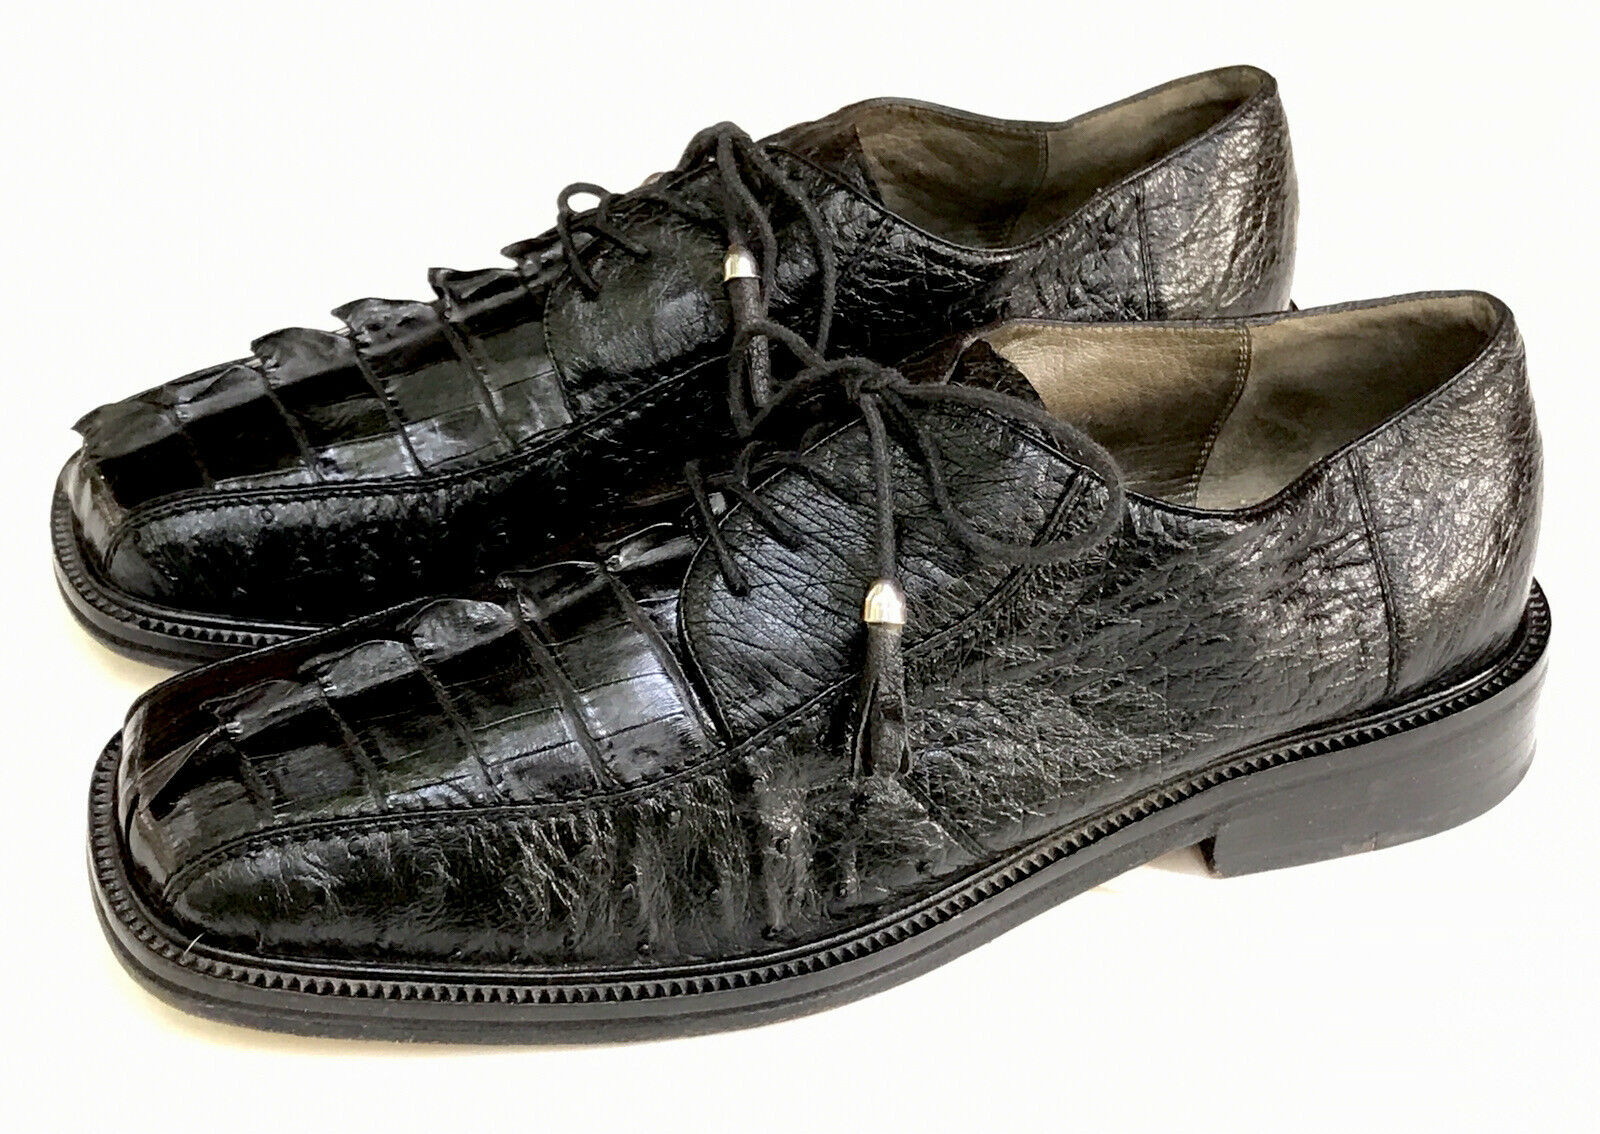 ROMANO EXOTIC SHOES Men’s Genuine Crocodile Tail Black Dress Shoes size 8.5